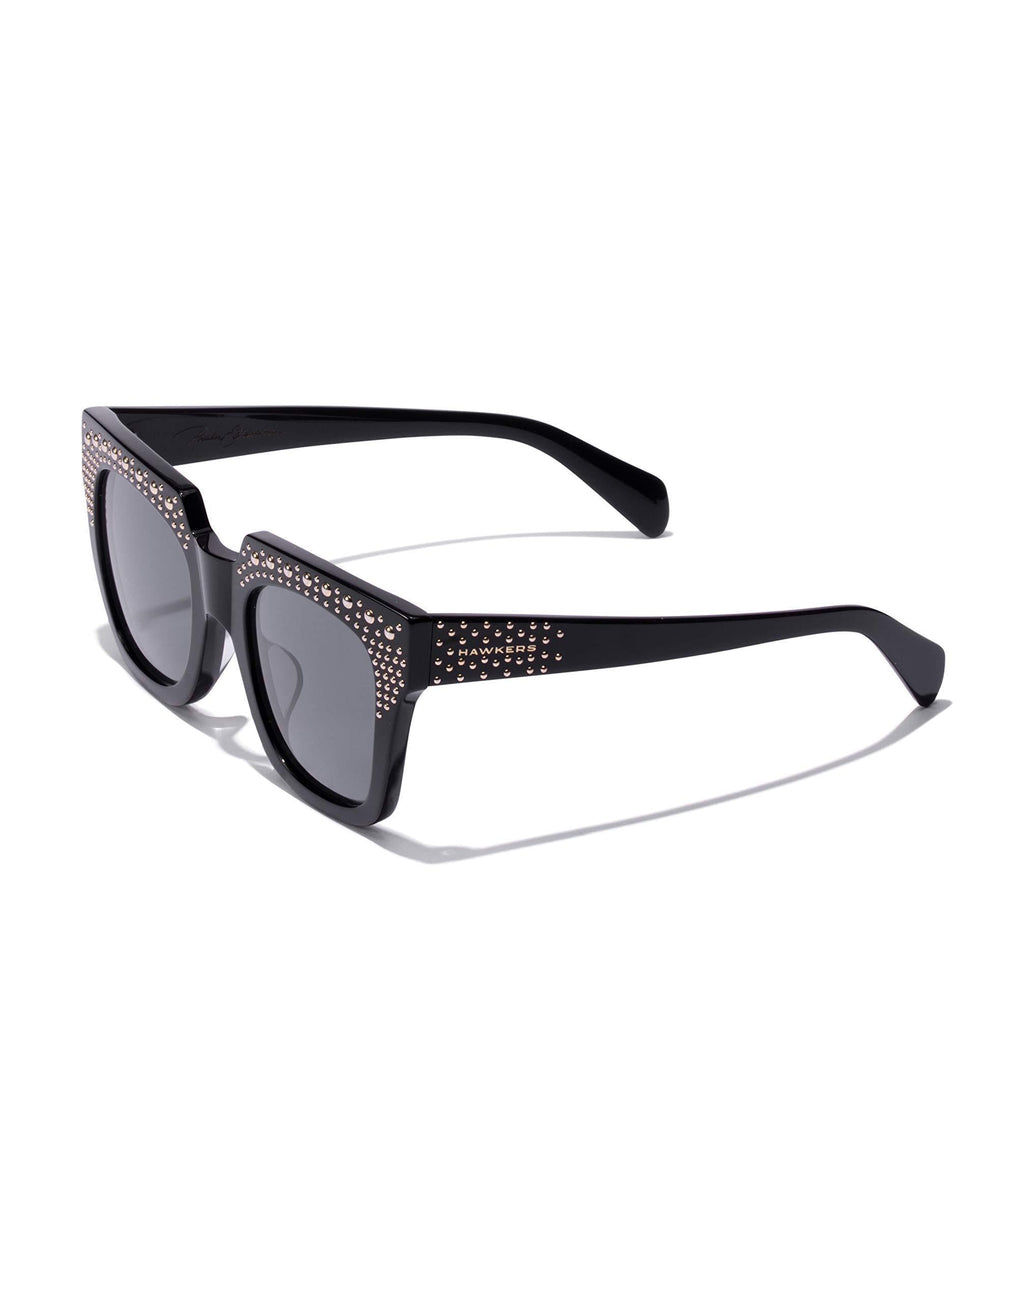 [Australia] - HAWKERS Women's MONDAINE Sunglasses, Black, One Size 